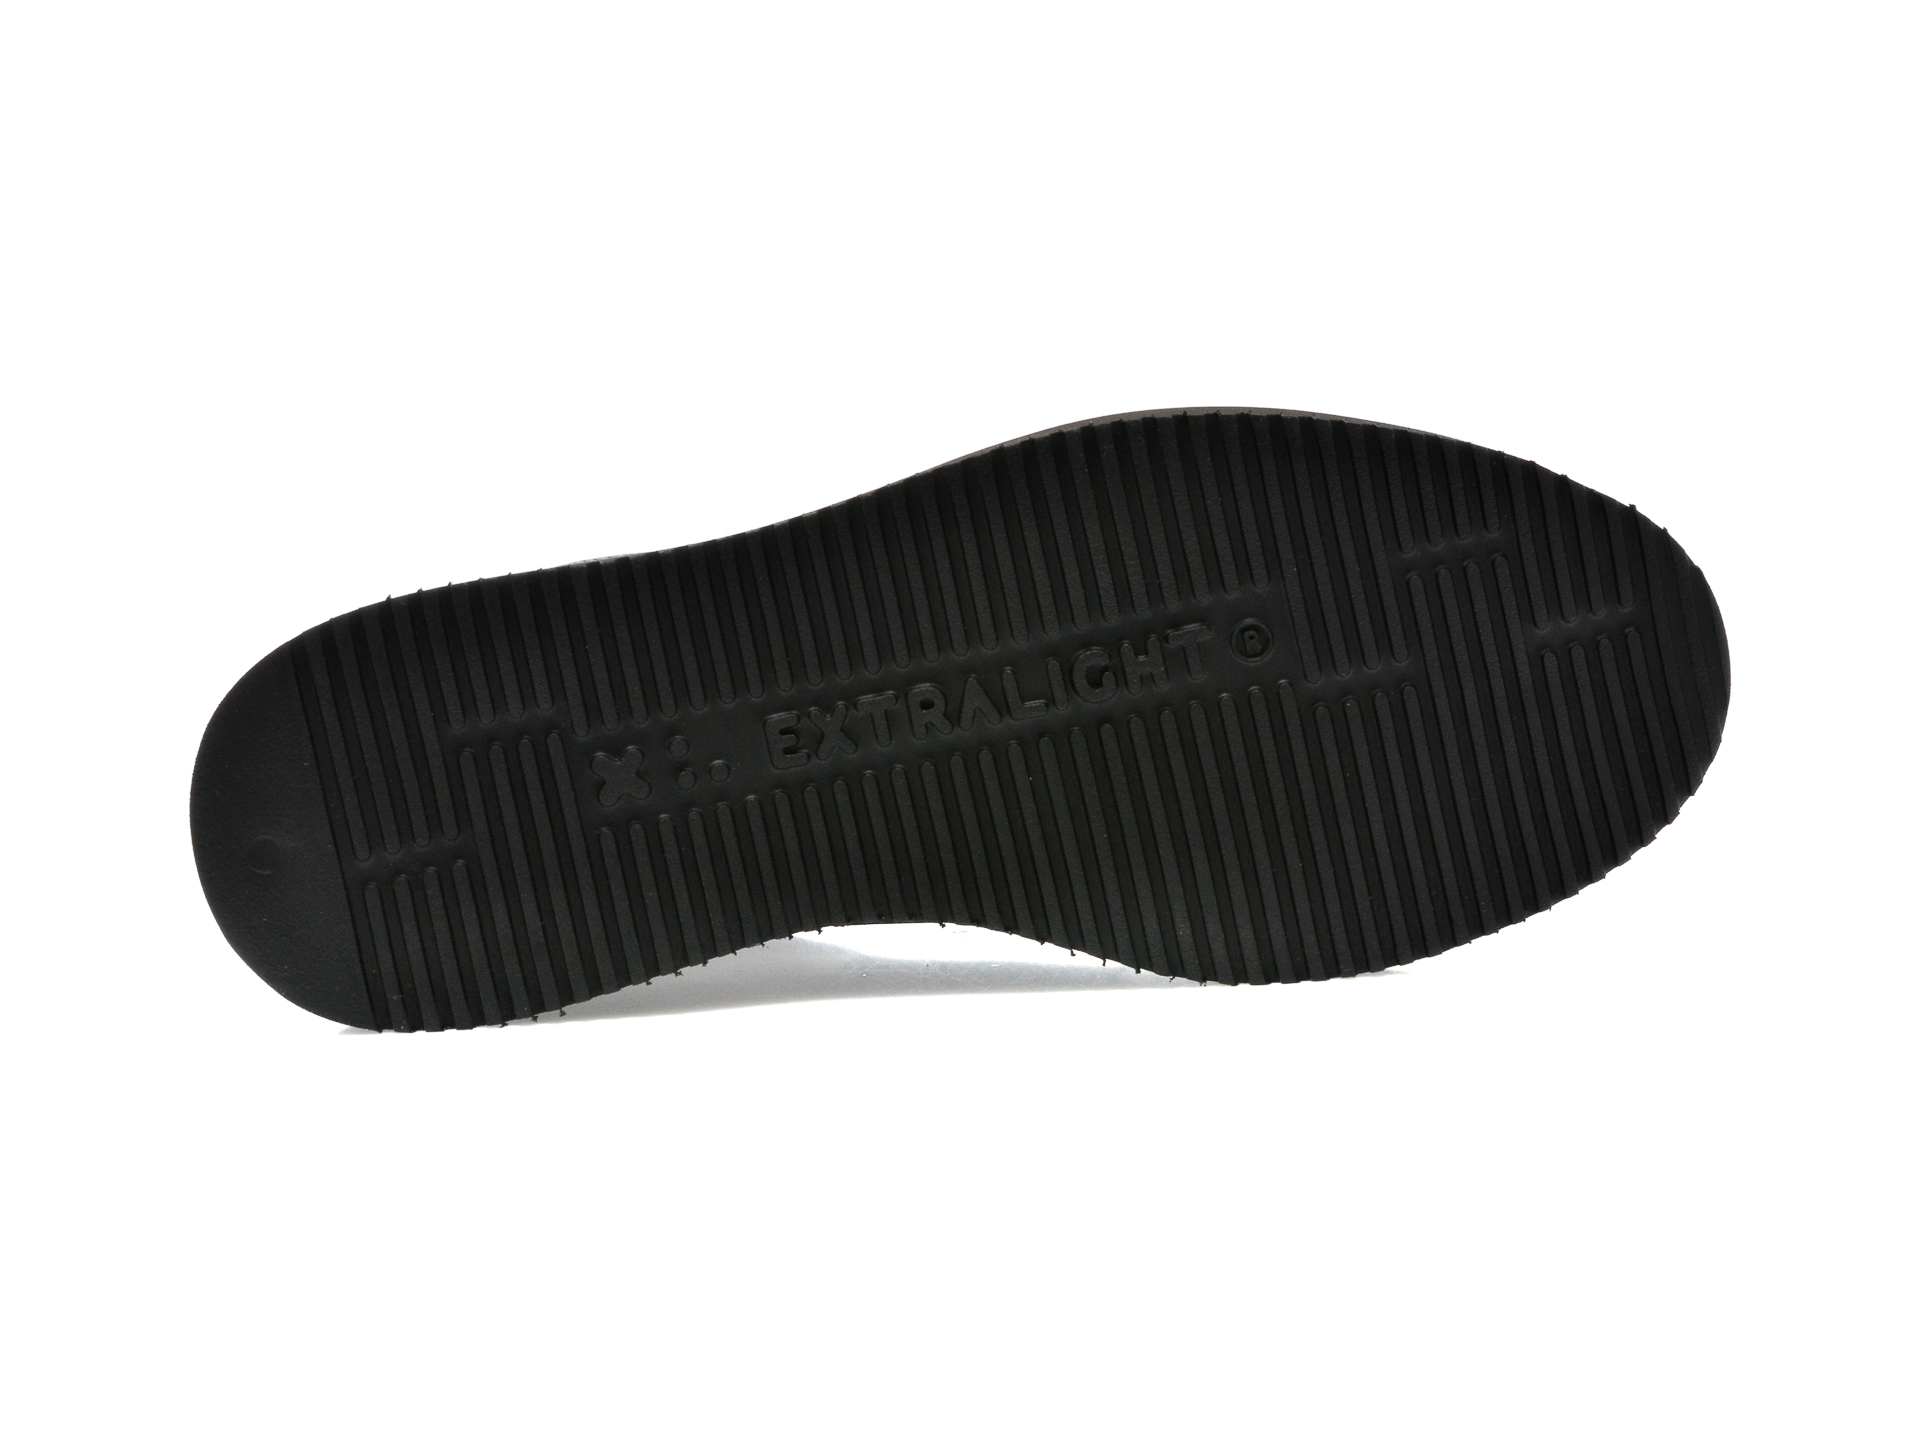 Poze Pantofi LE COLONEL negri, 64833, din piele naturala otter.ro